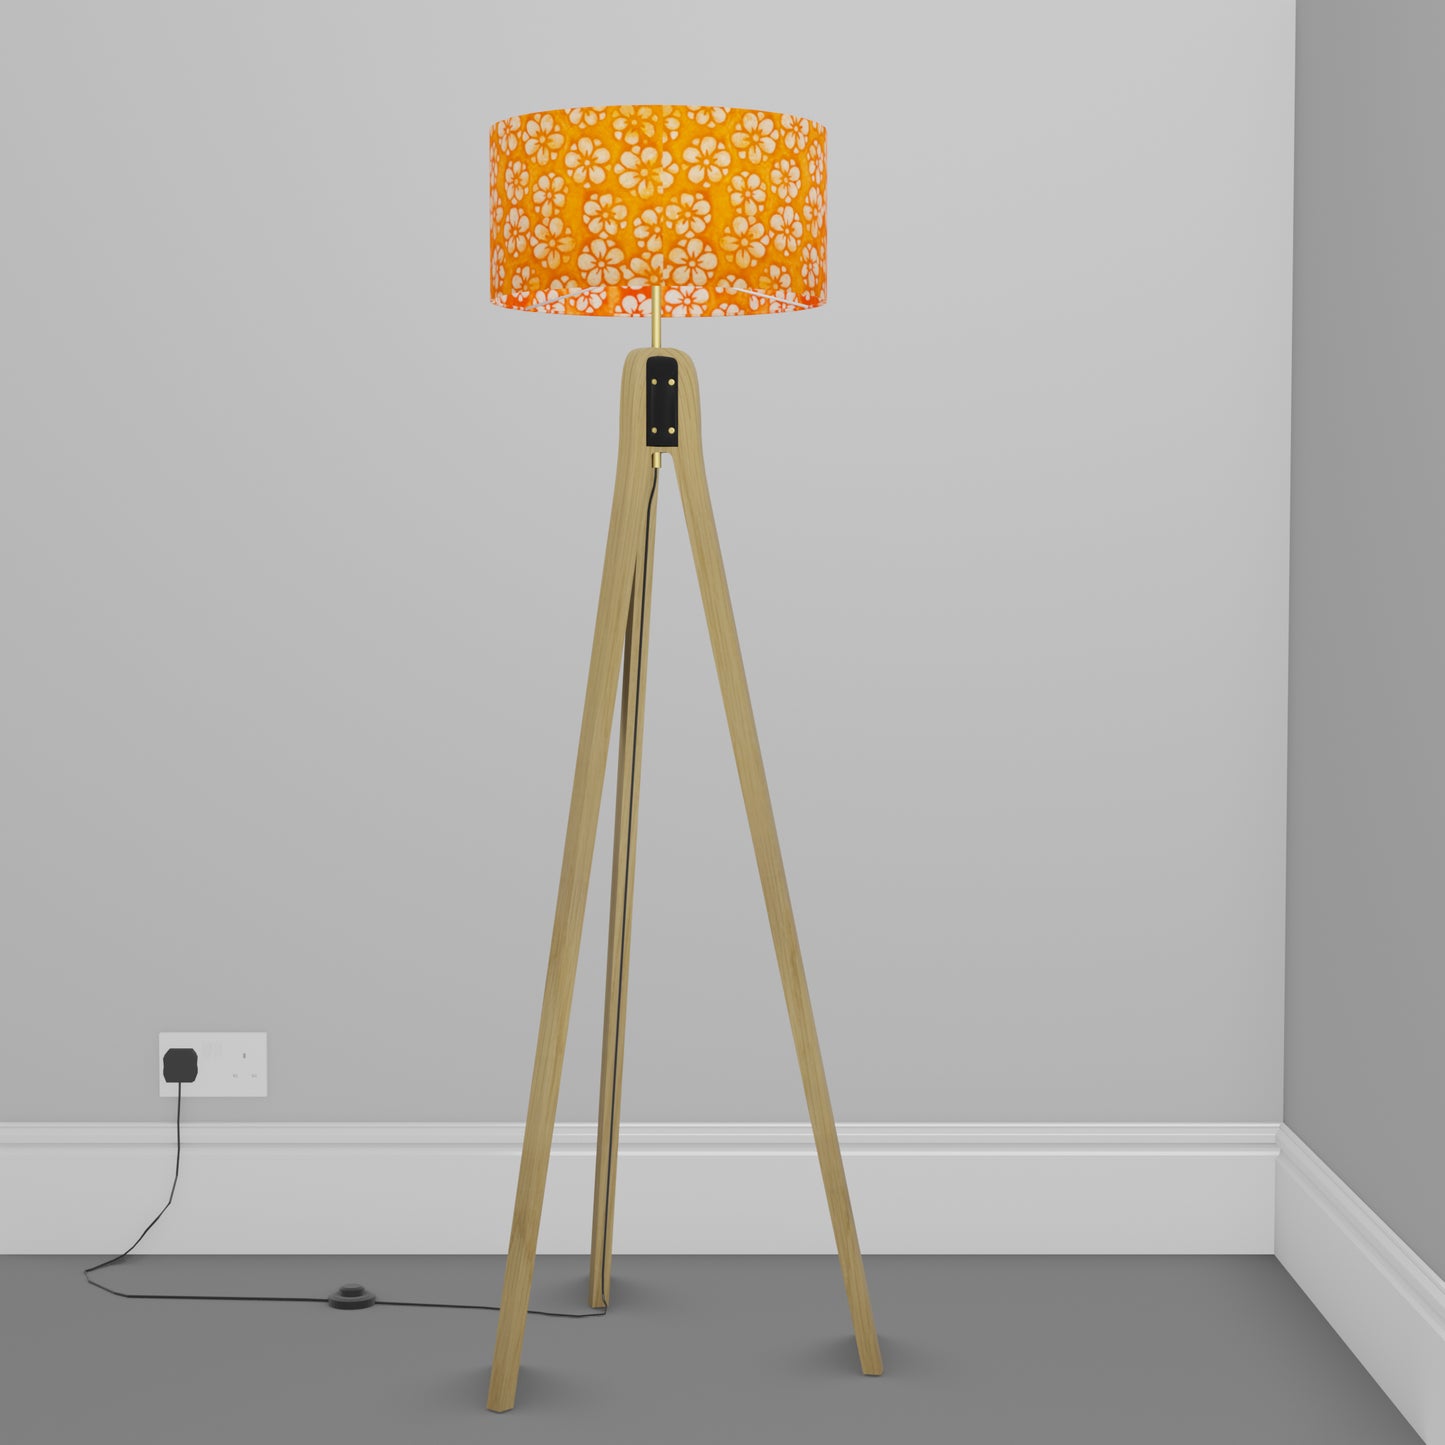 Oak Tripod Floor Lamp - P94 - Batik Star Flower on Orange